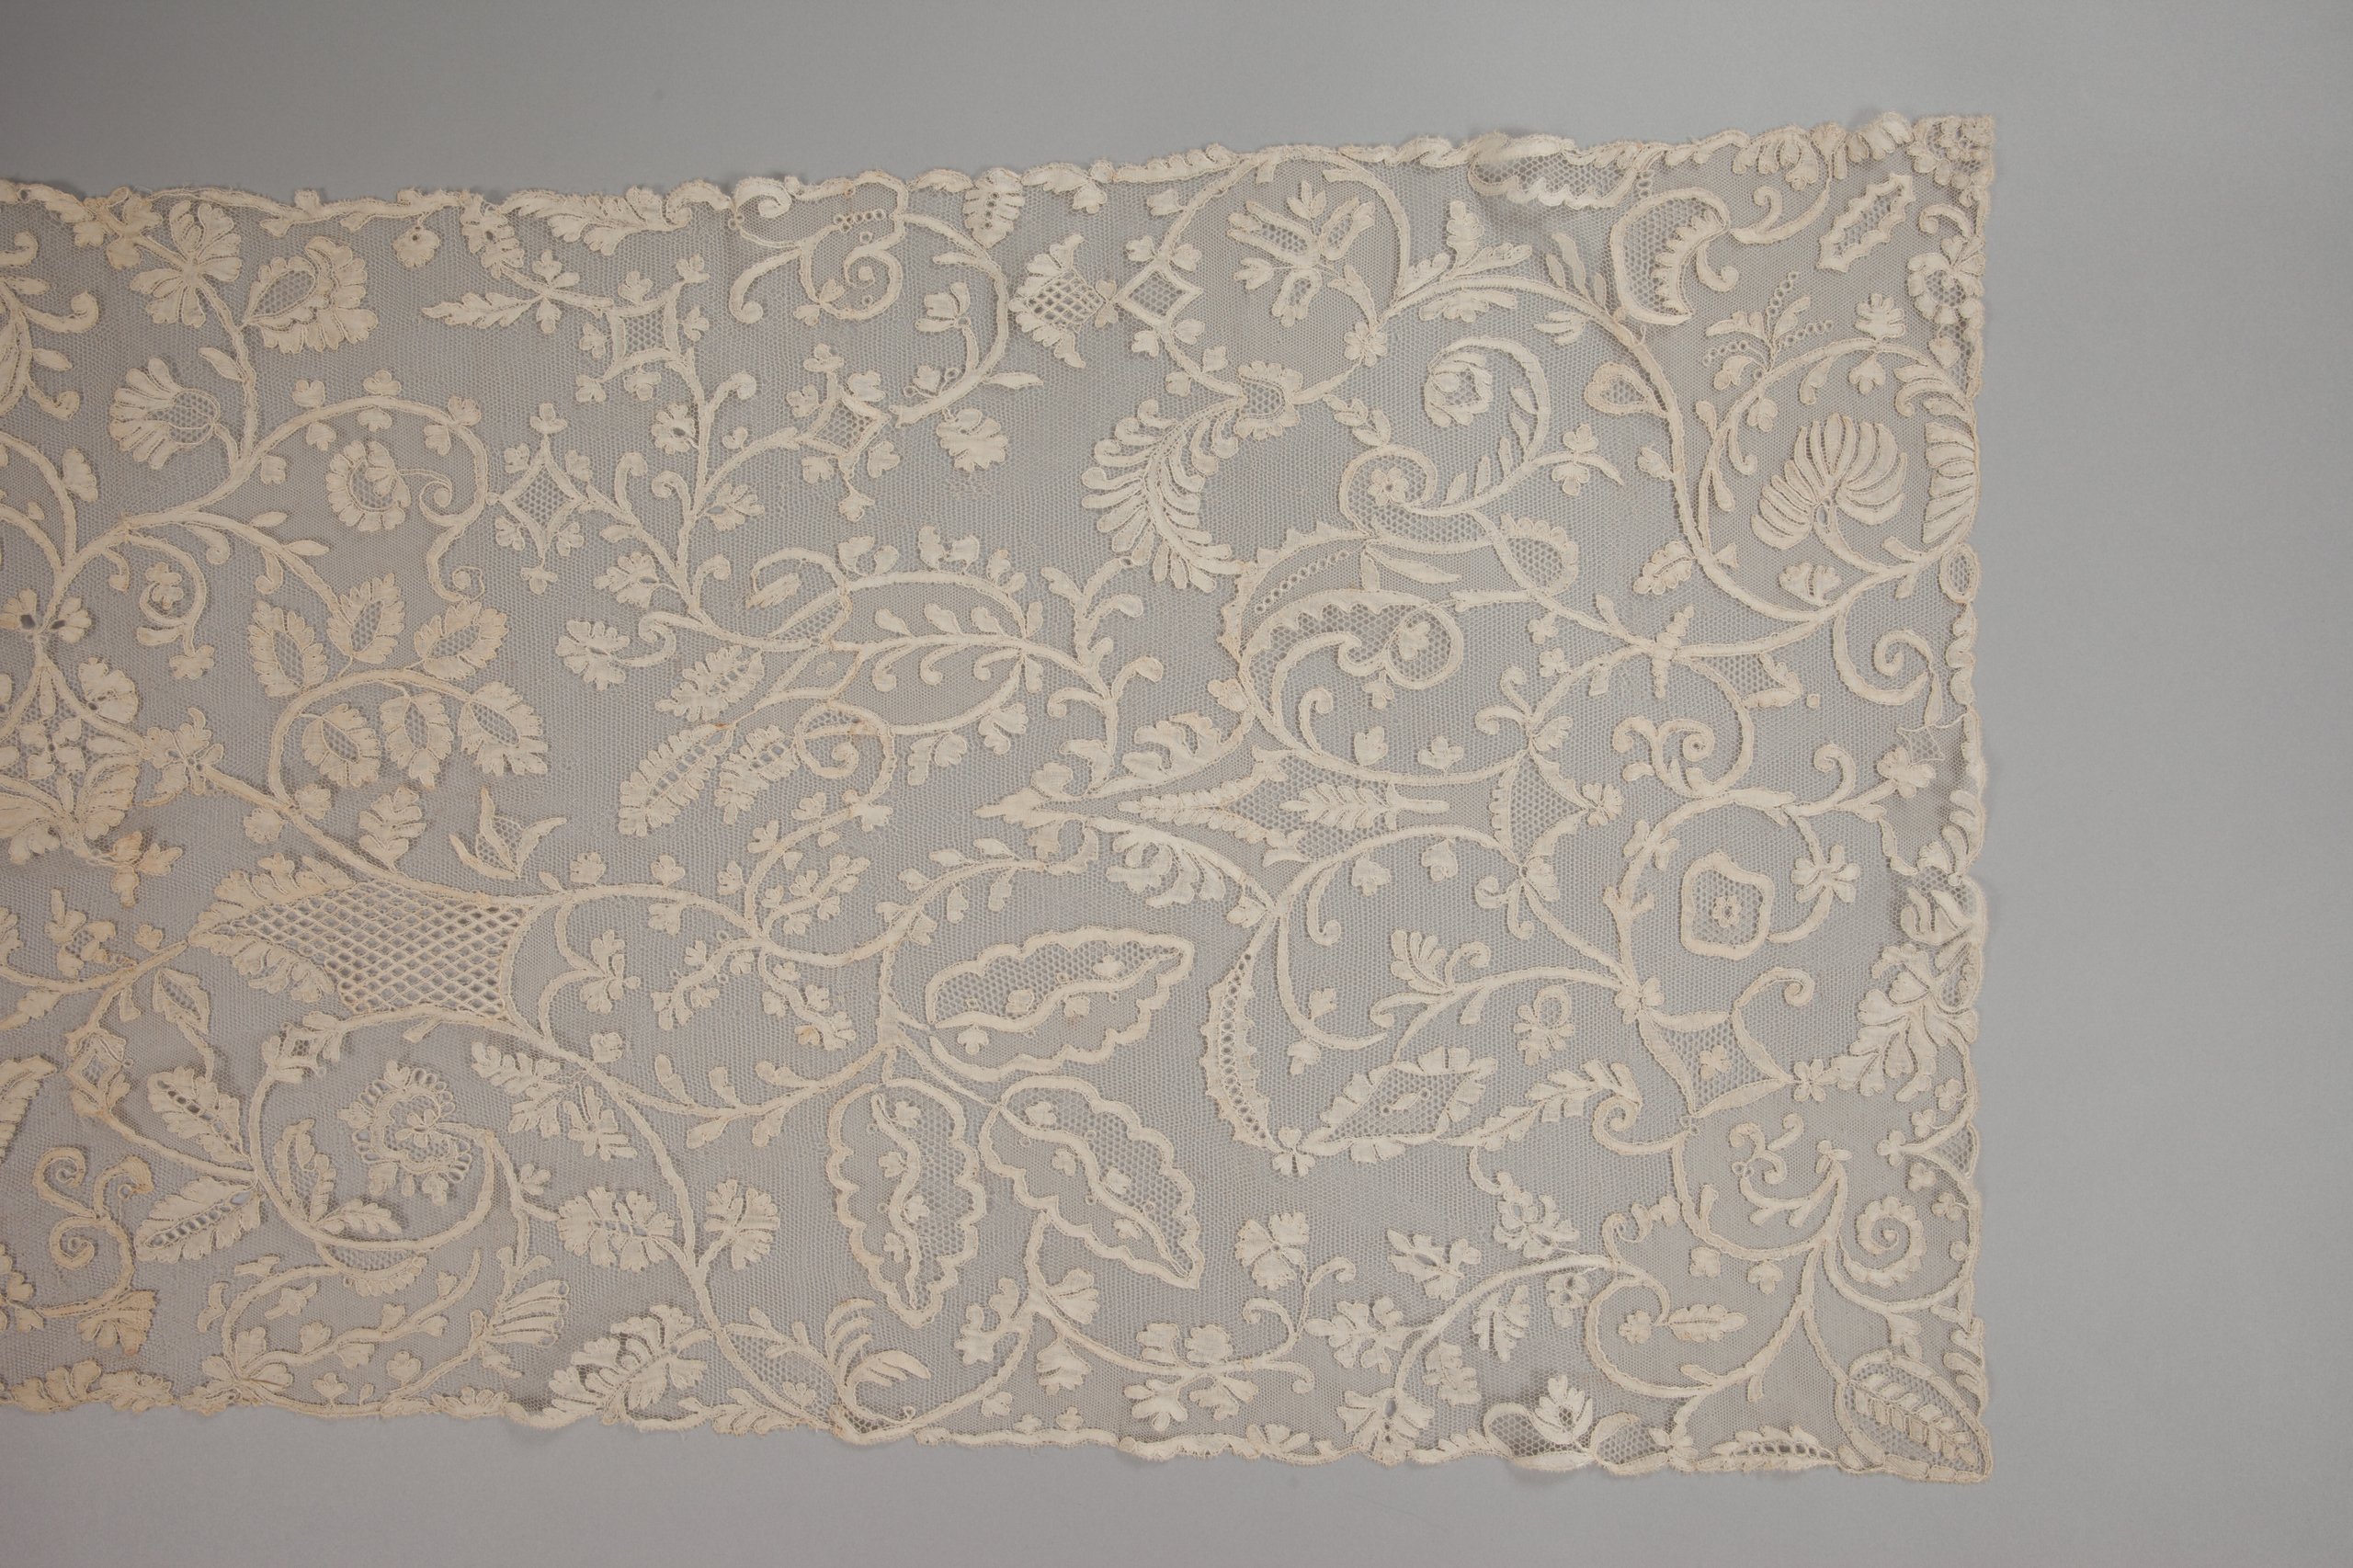 18th century shawl from England